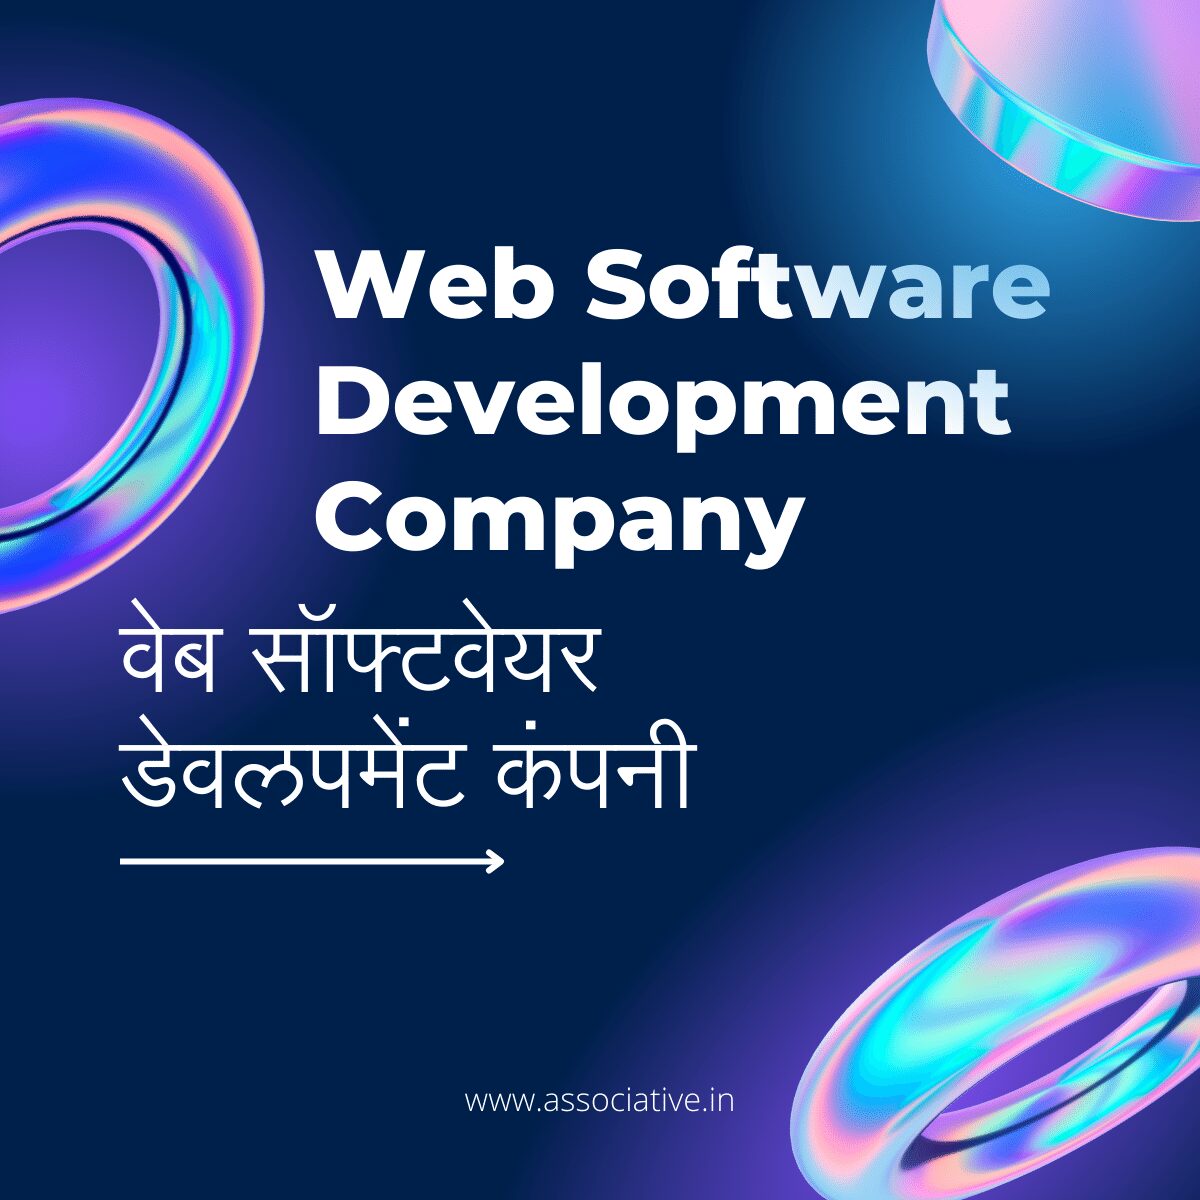 Web Software Development Company वेब सॉफ्टवेयर डेवलपमेंट कंपनी